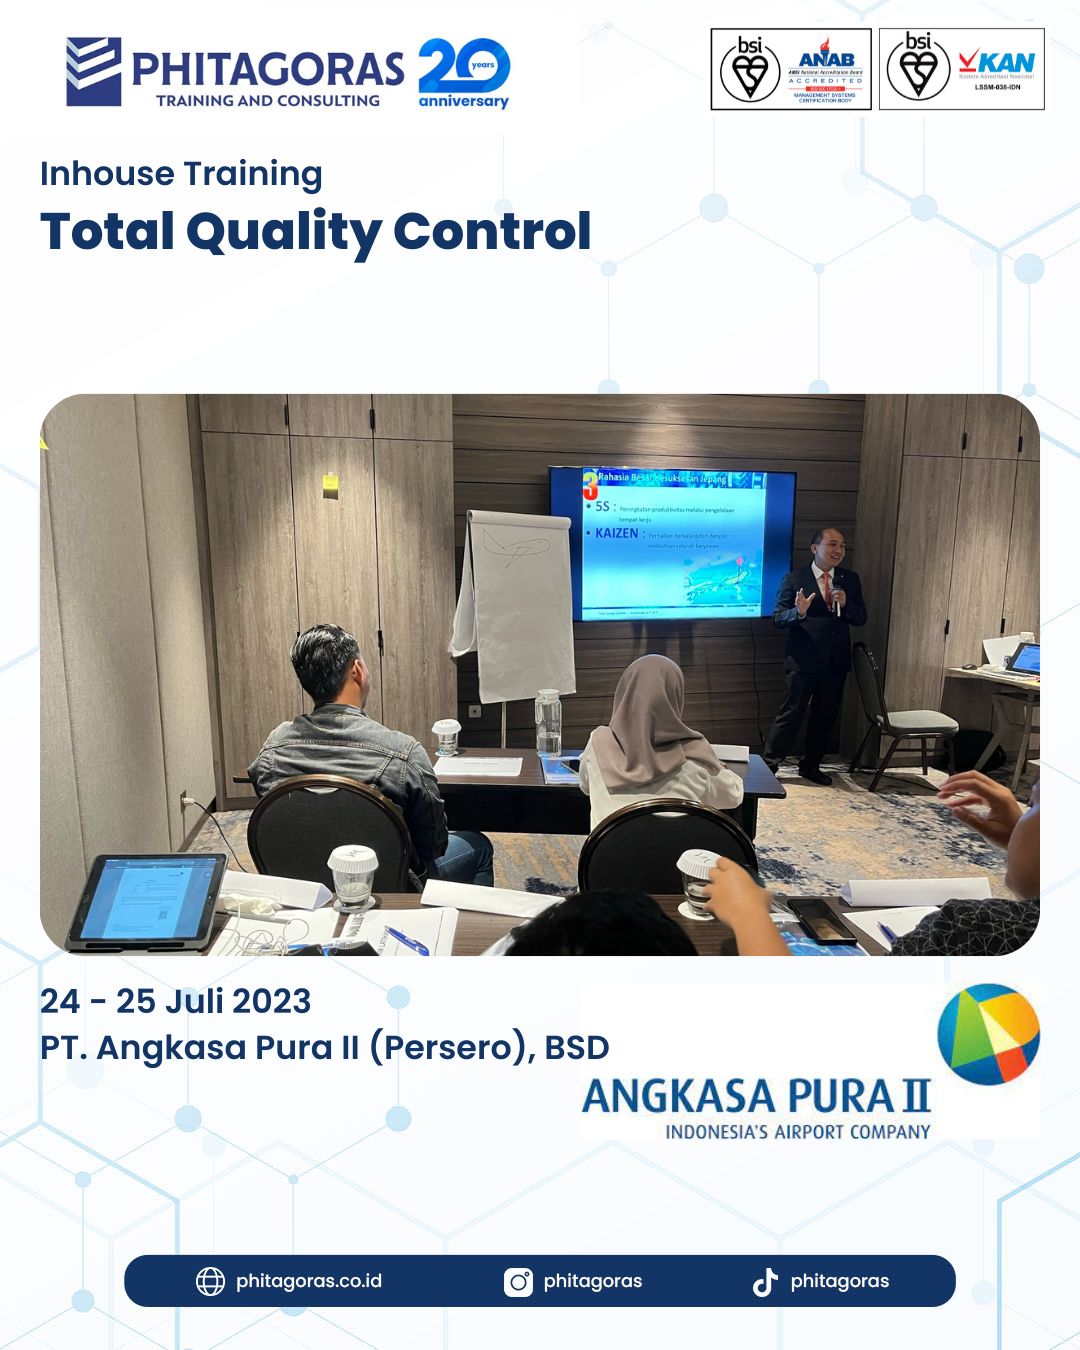 Inhouse Training Total Quality Control - PT. Angkasa Pura II (Persero), BSD